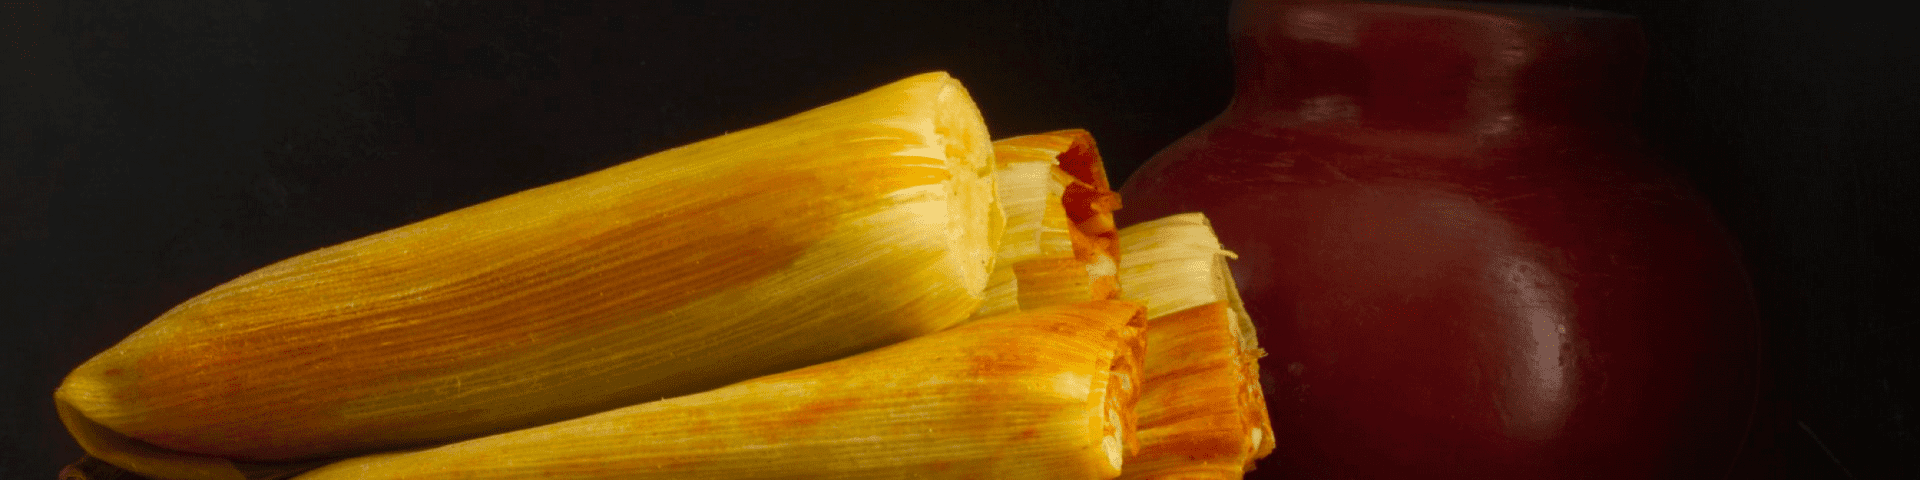 tamales recetas